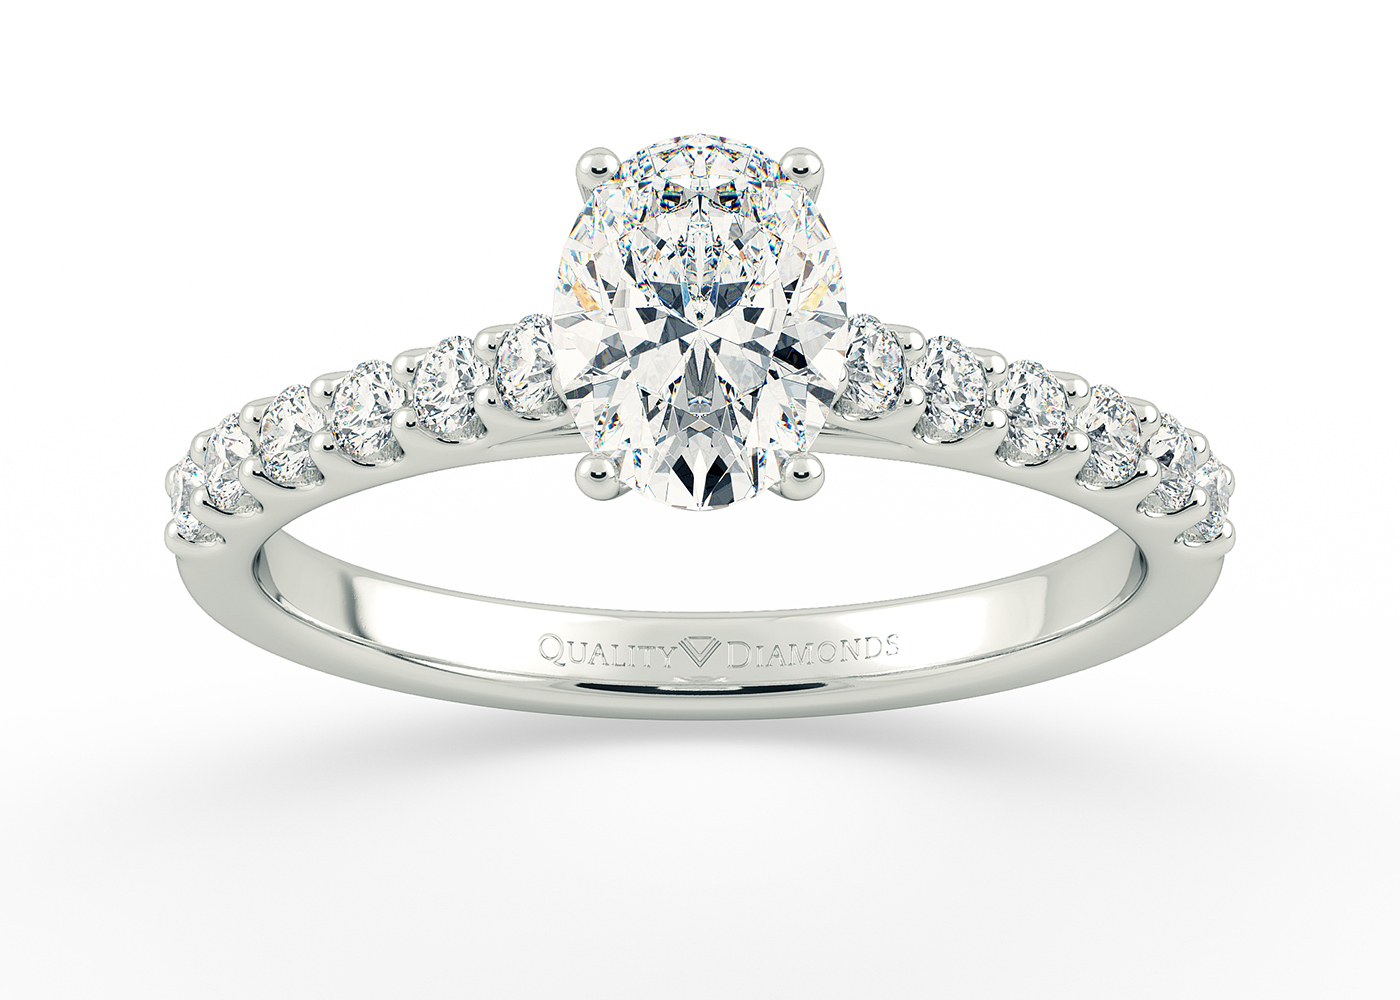 Two Carat Oval Diamond Set Diamond Engagement Ring in 18K White Gold